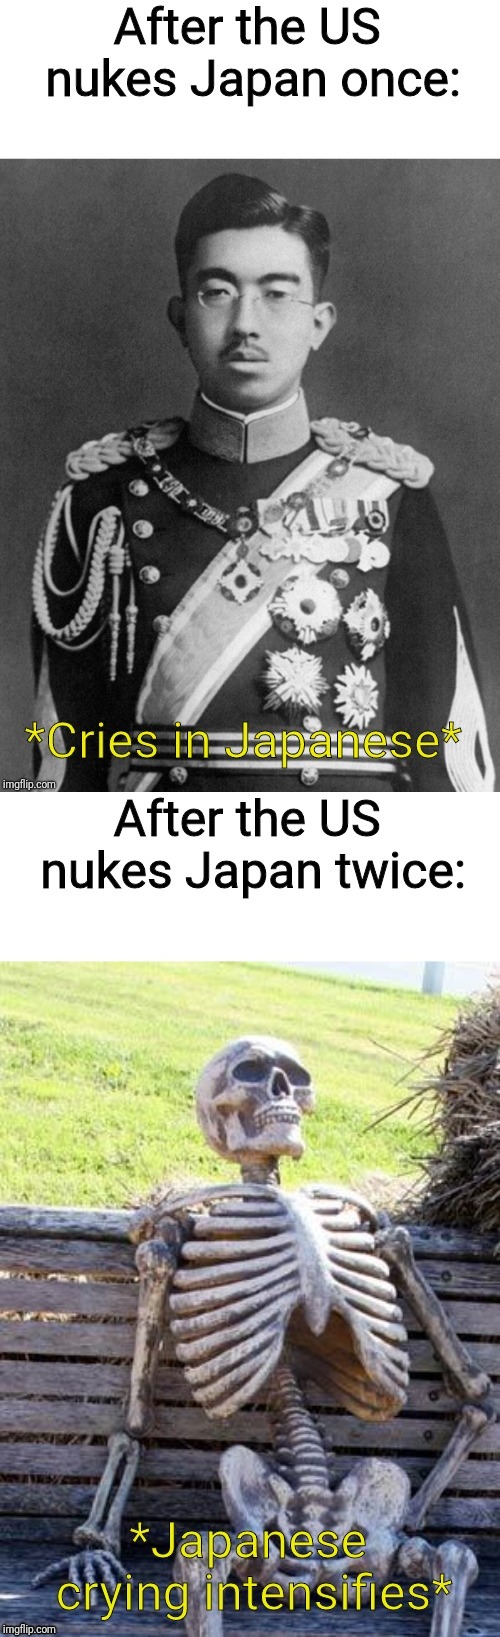 USA nuke japan | image tagged in japan,nuke,ww2 | made w/ Imgflip meme maker